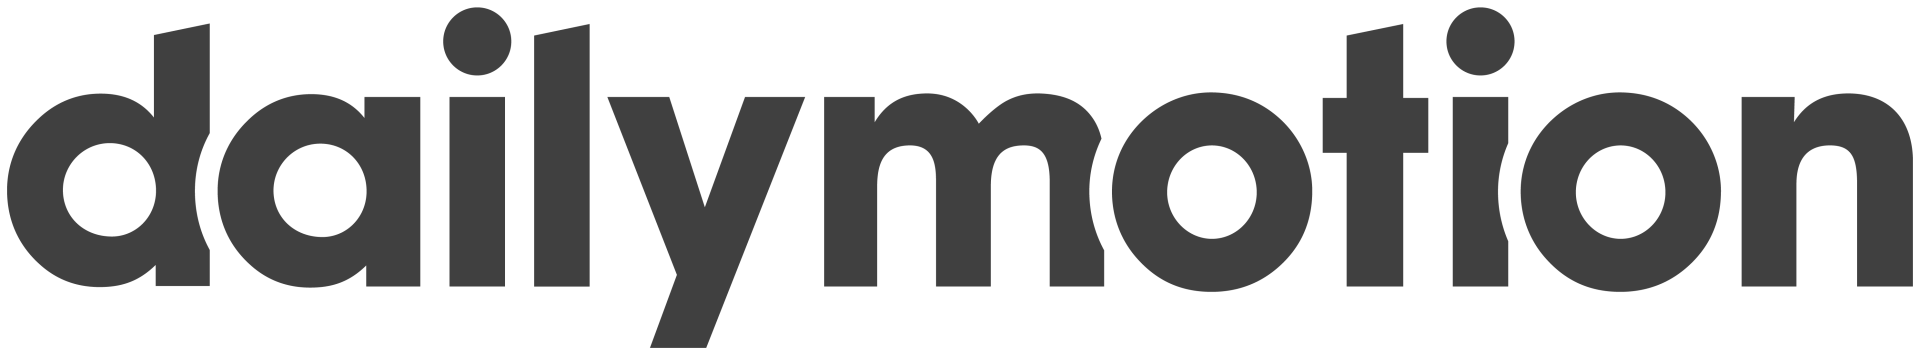 Logo Dailymotion 2015  300dpi (grey)